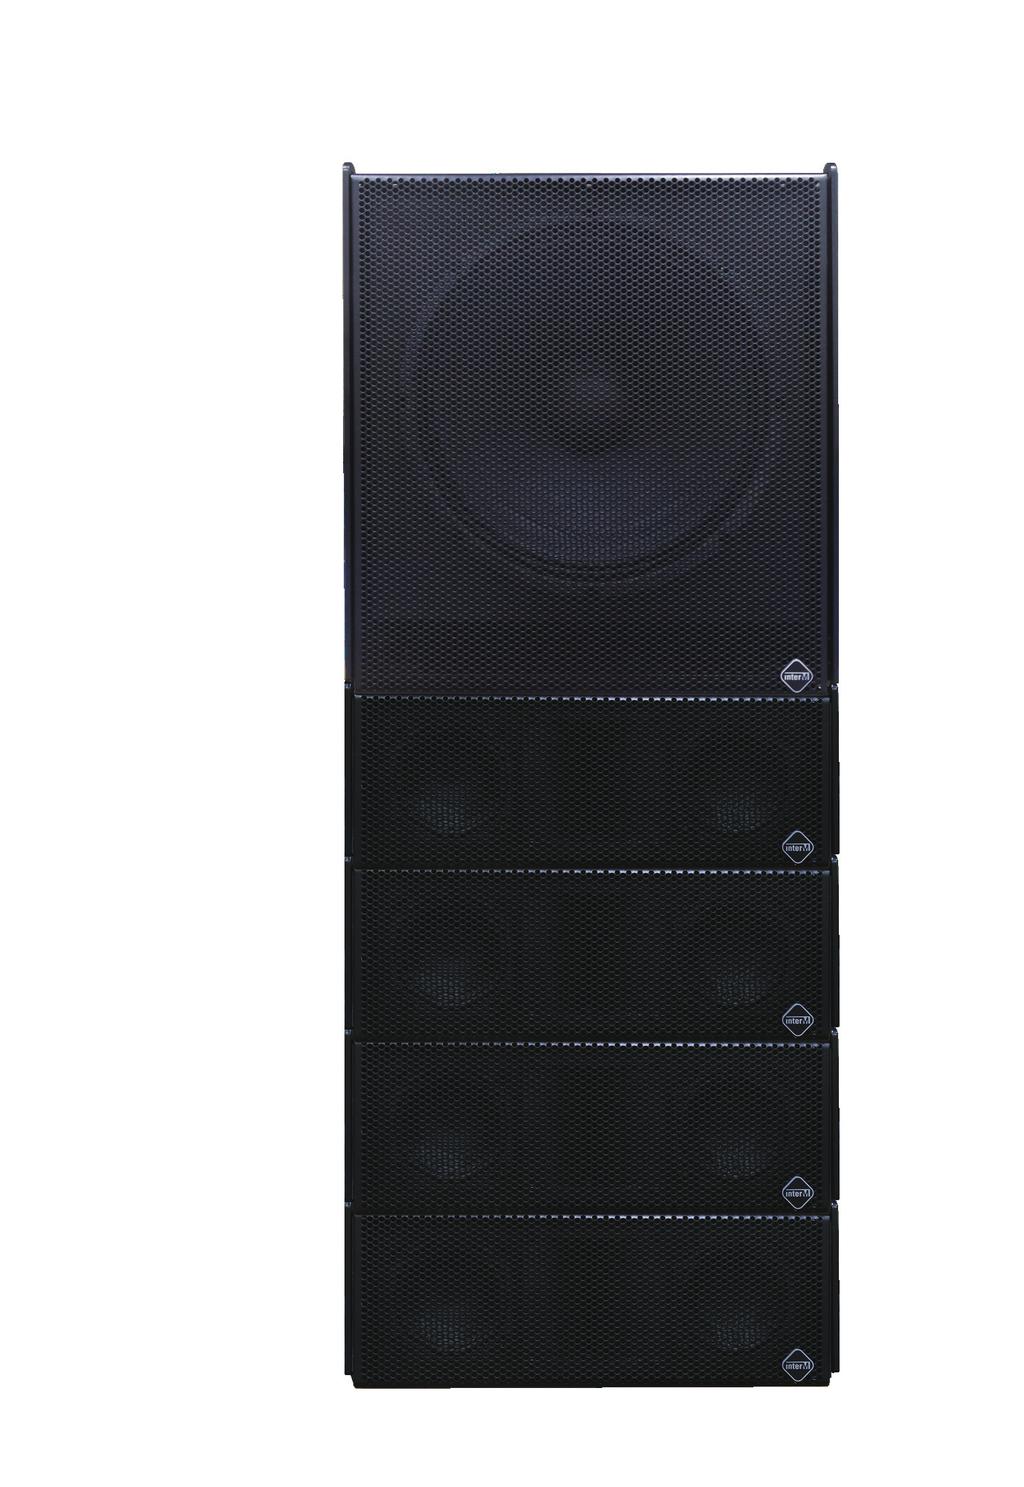 /15S Professional Line Array Speaker System